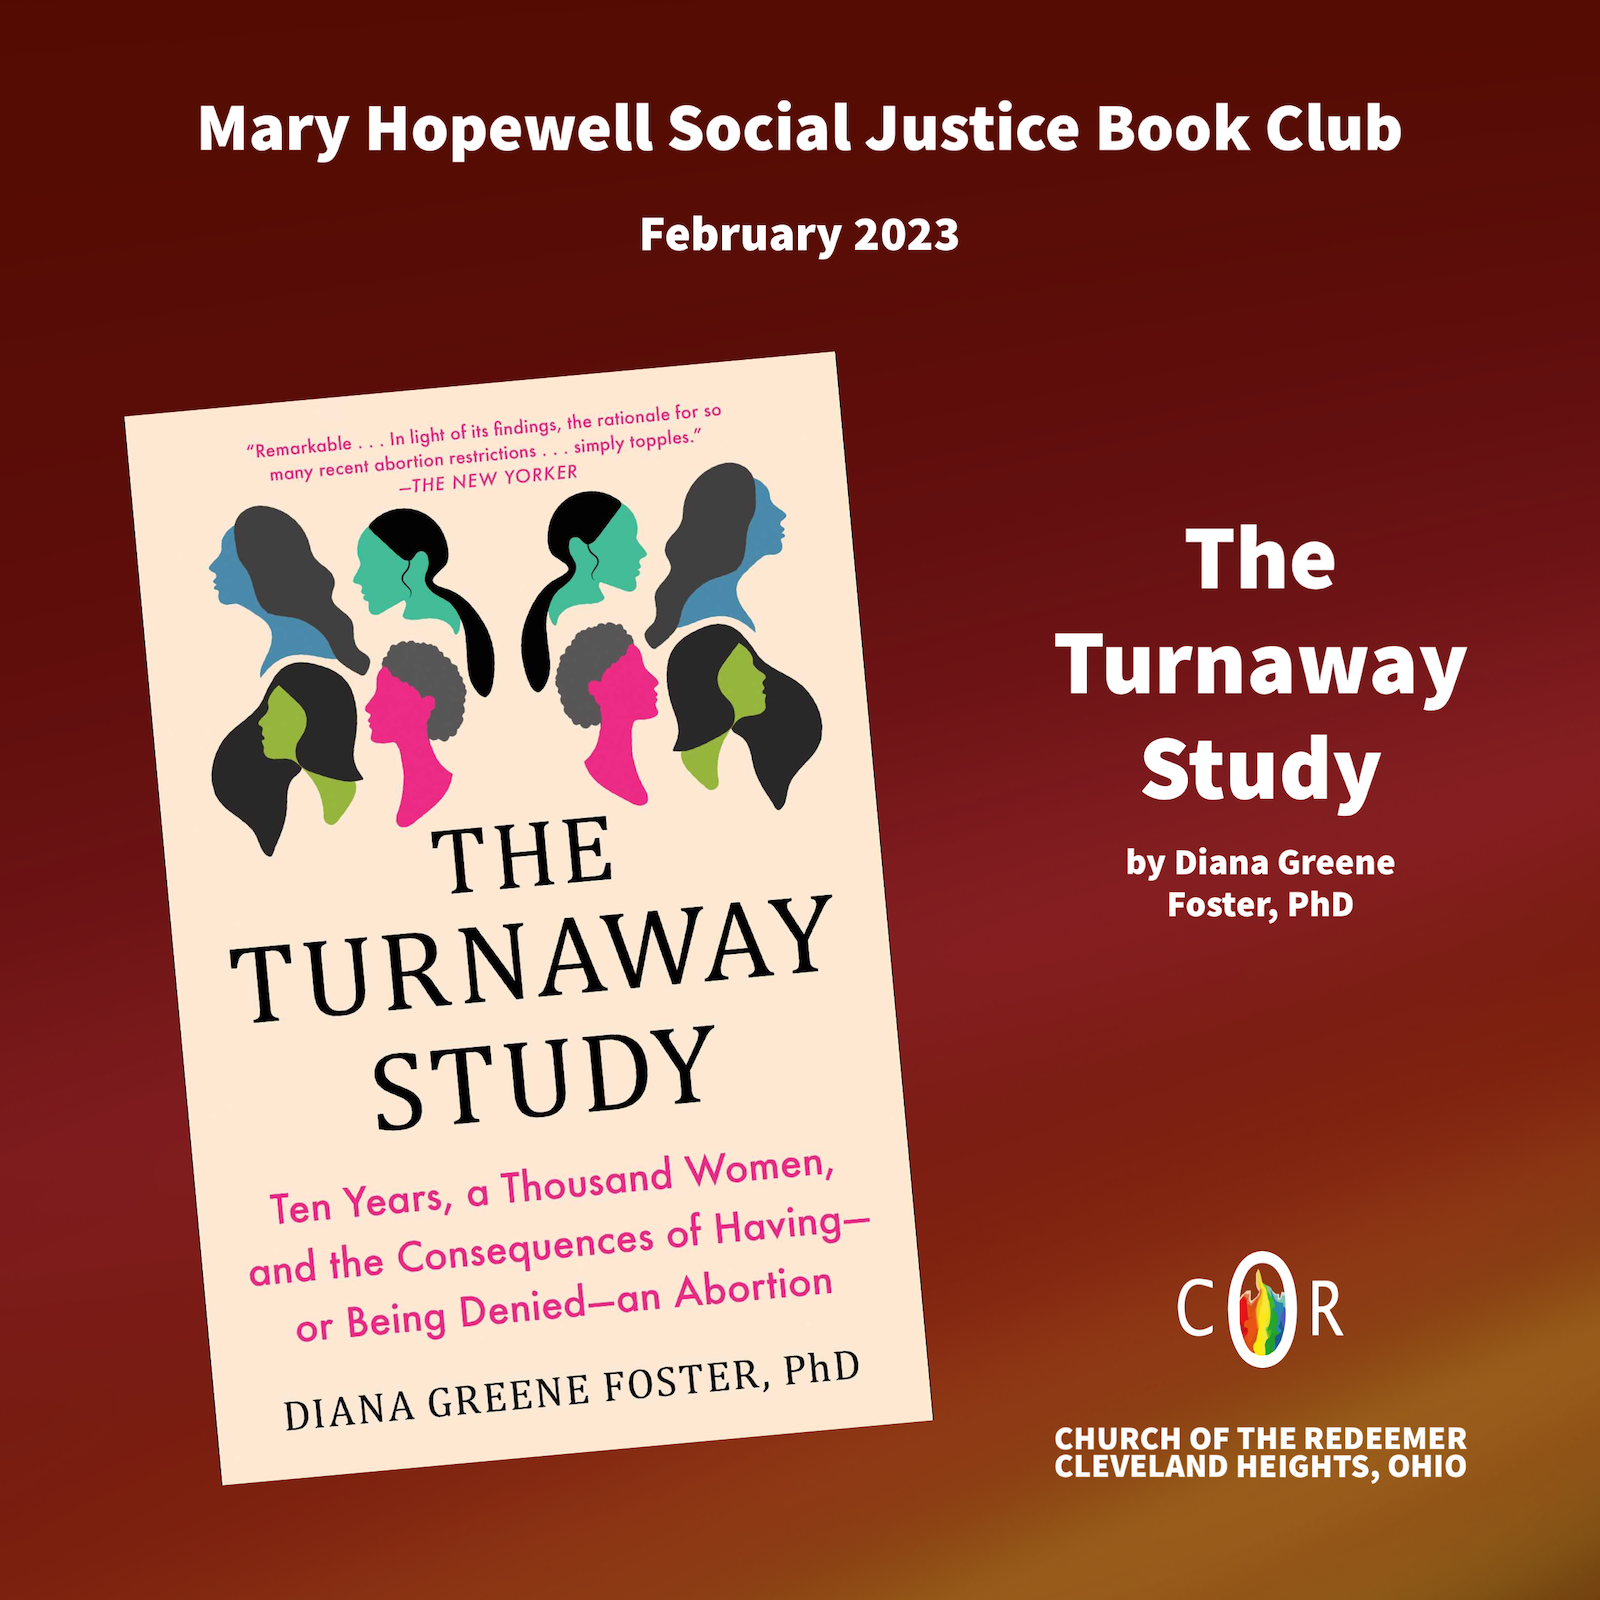 The Turnaway Study by Diana Greene Foster, PhD